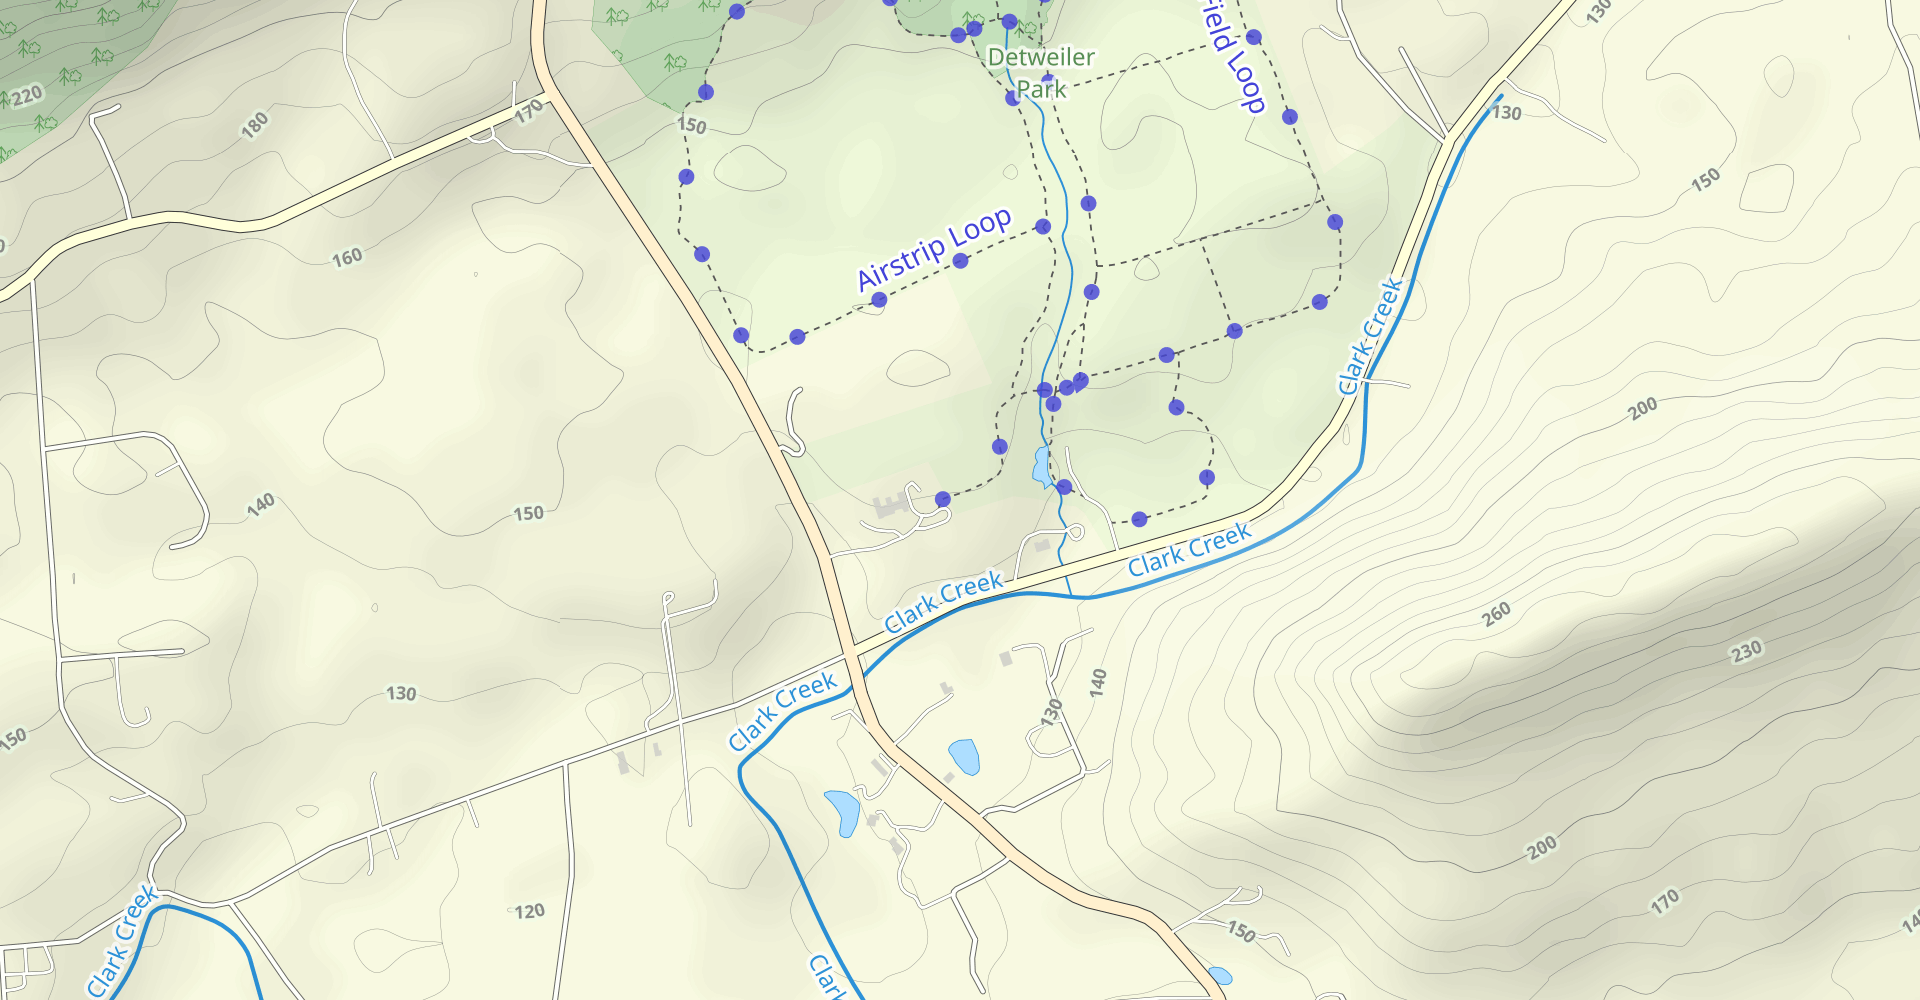 Detweiler Park Trails Loop